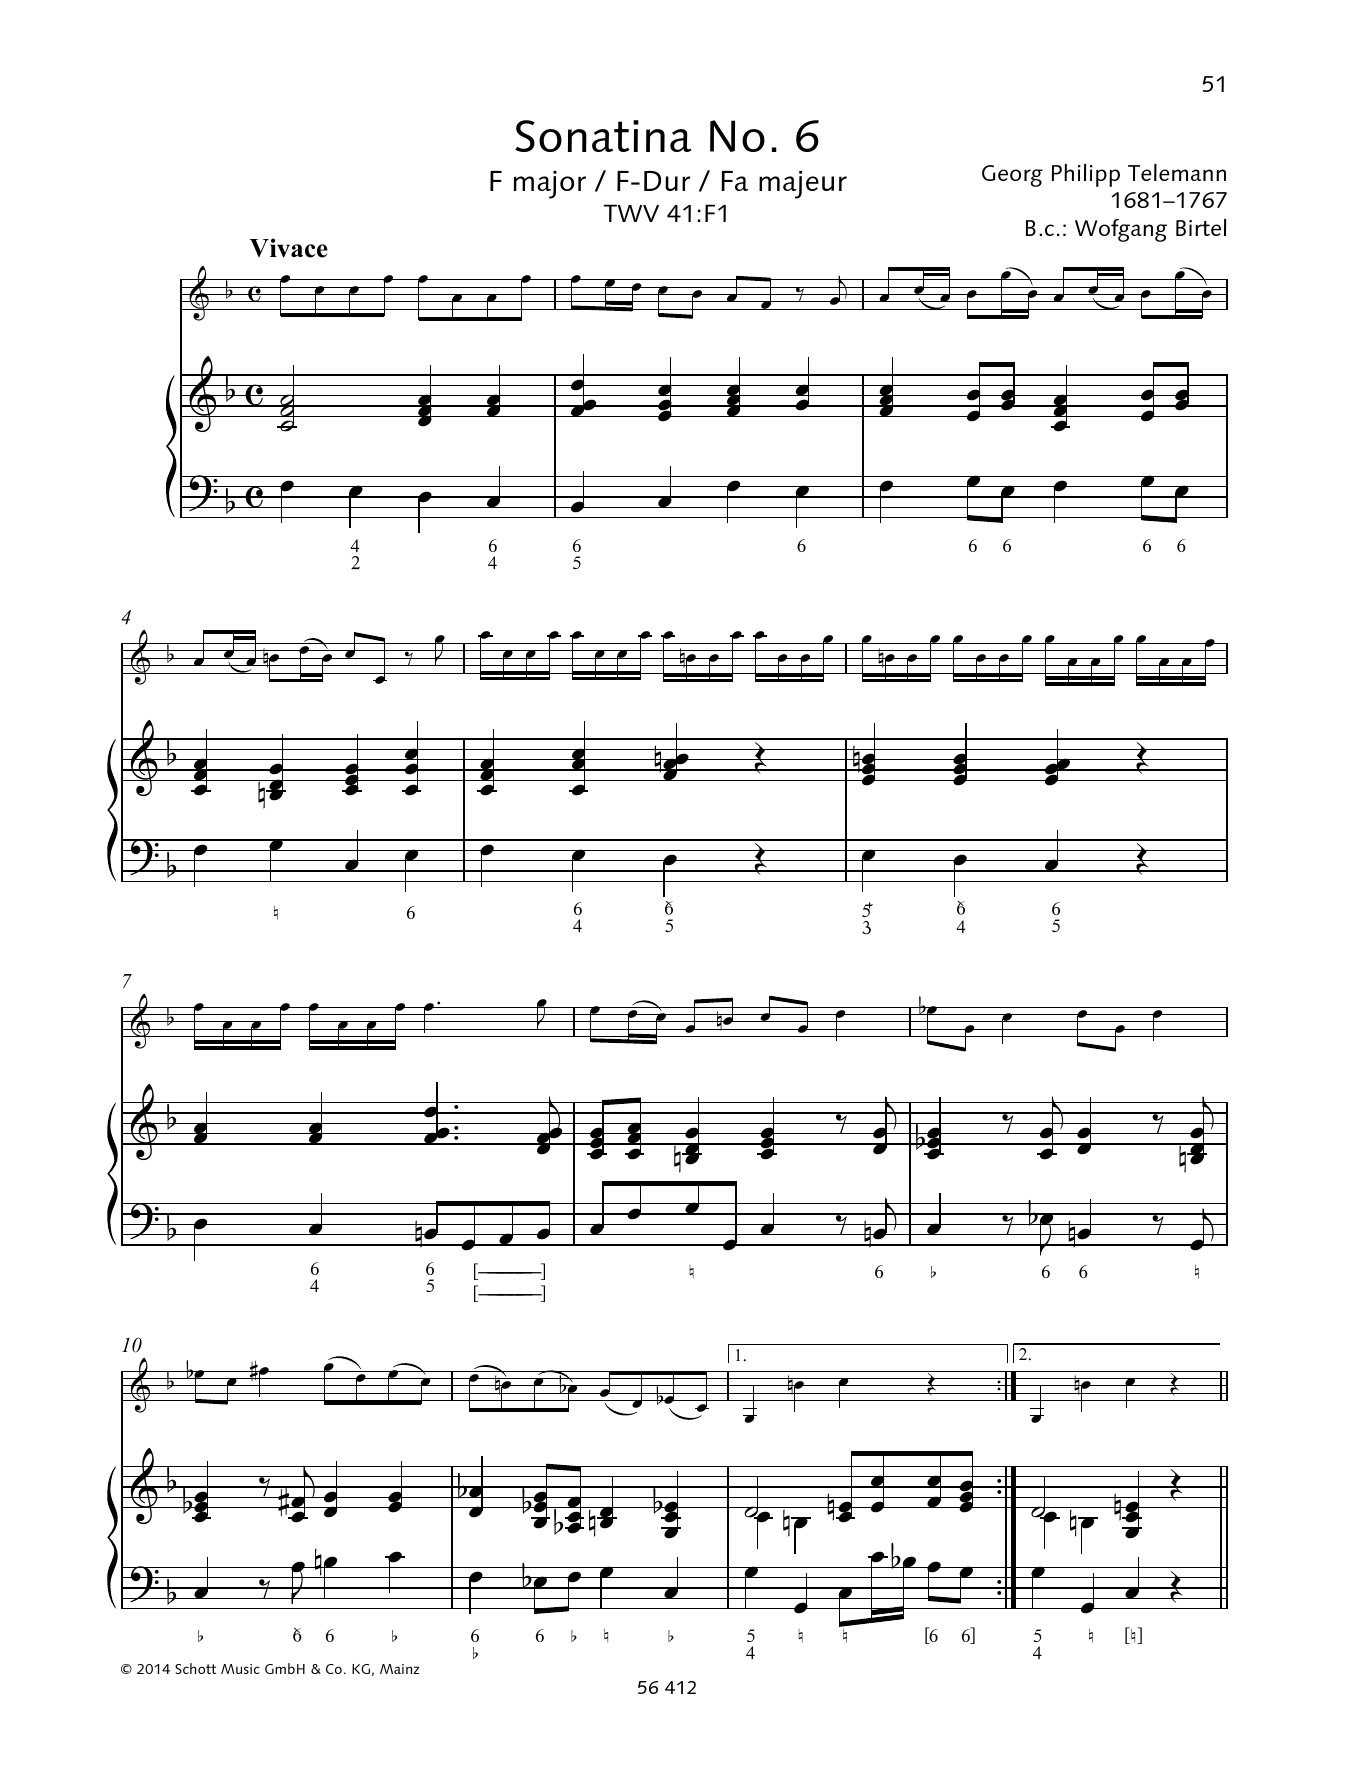 Download Georg Philipp Telemann Sonatina No. 6 F major Sheet Music